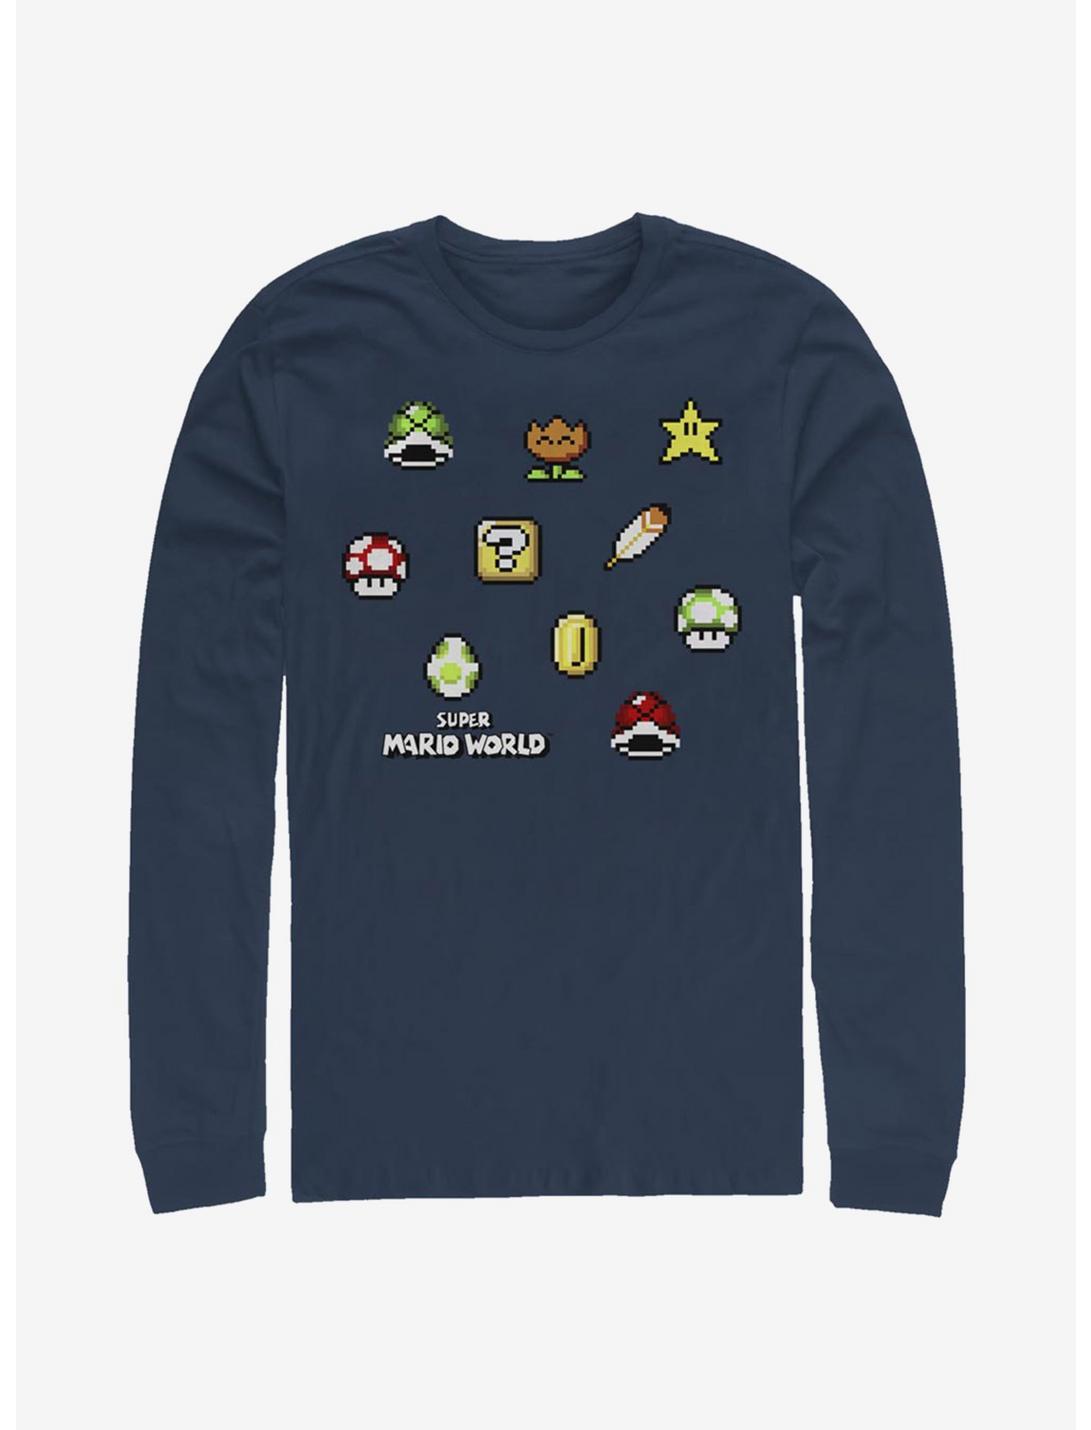 Super Mario Maker Items Scatter Long-Sleeve T-Shirt, NAVY, hi-res